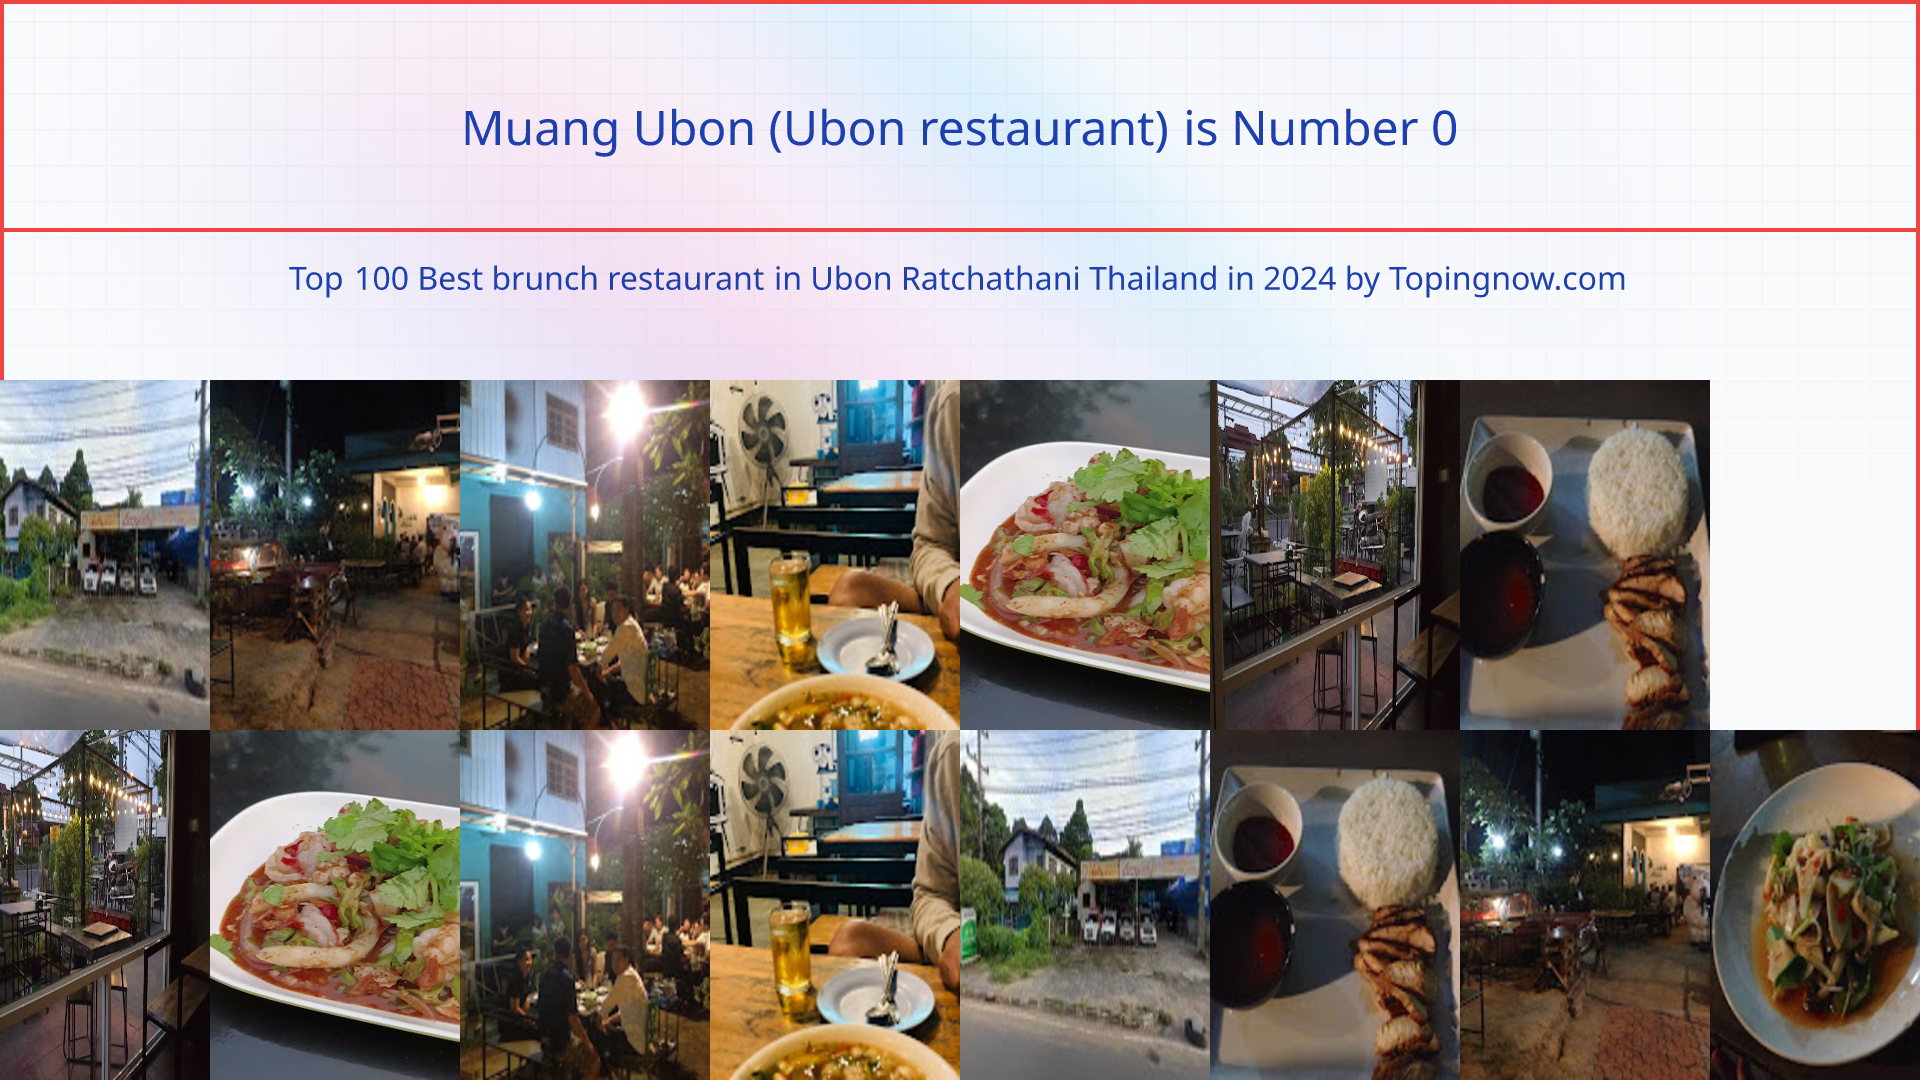 Muang Ubon (Ubon restaurant): Top 100 Best brunch restaurant in Ubon Ratchathani Thailand in 2024